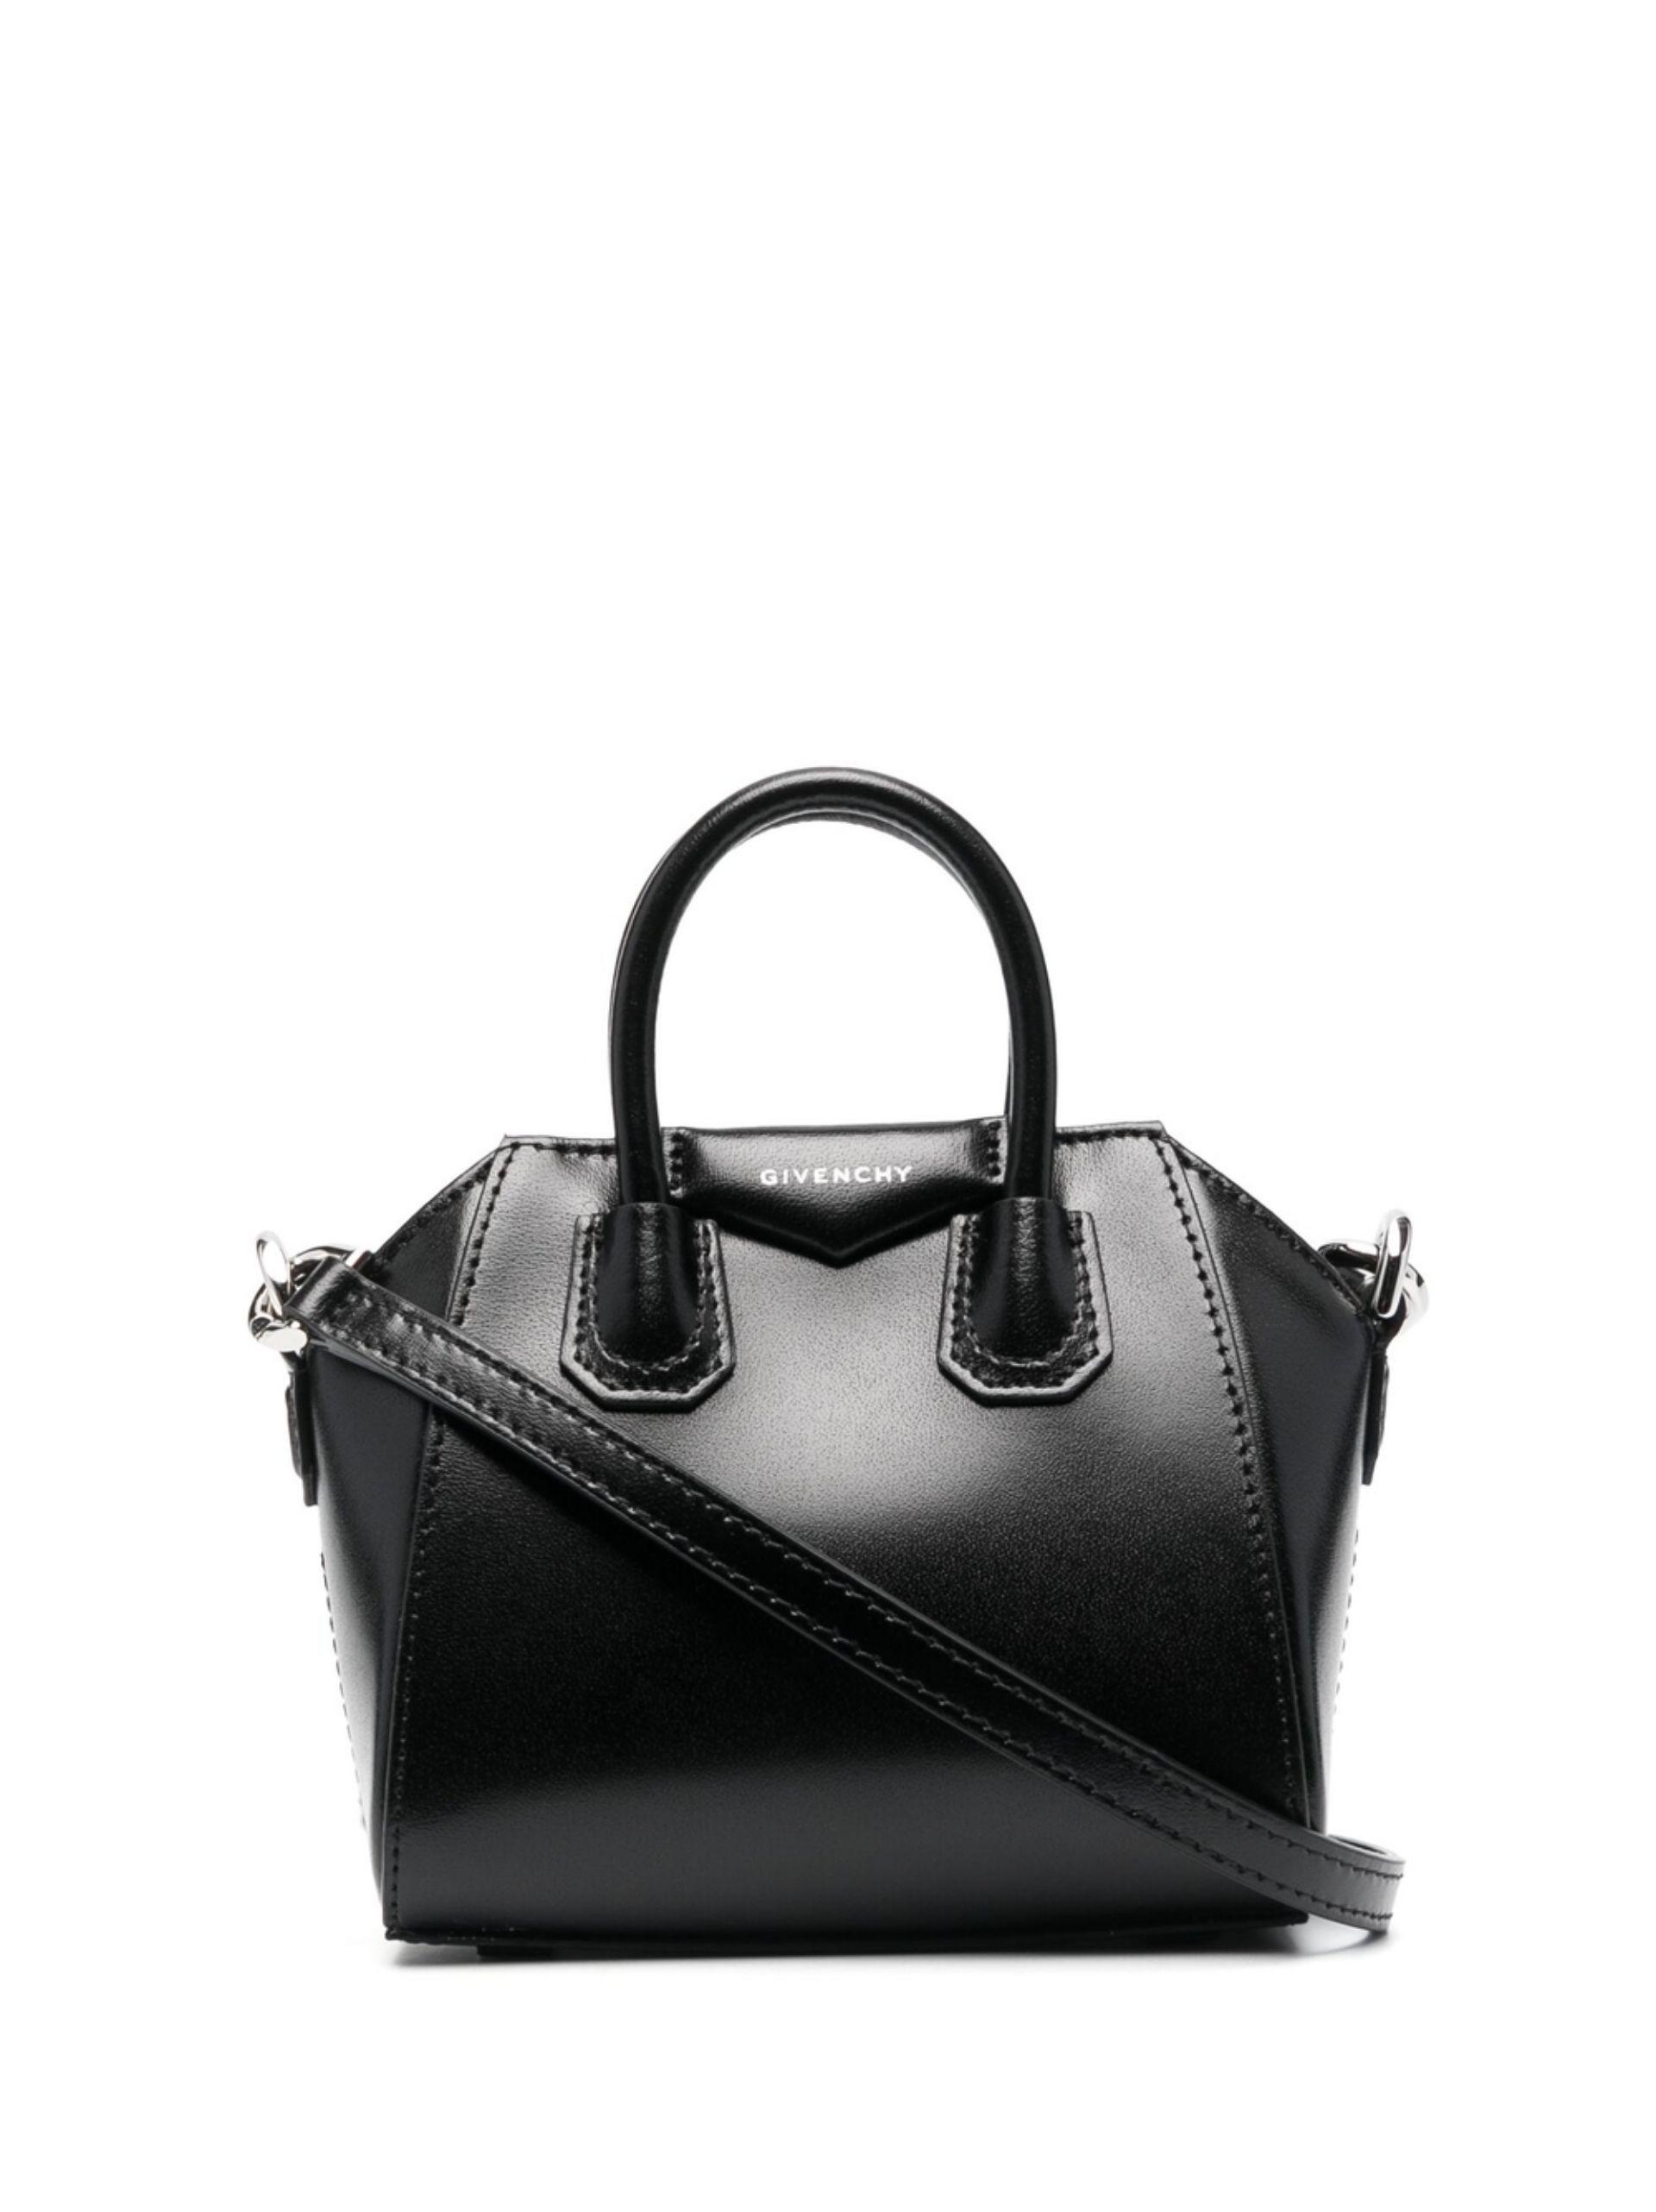 Antigona Small Leather Tote Bag in Black - Givenchy